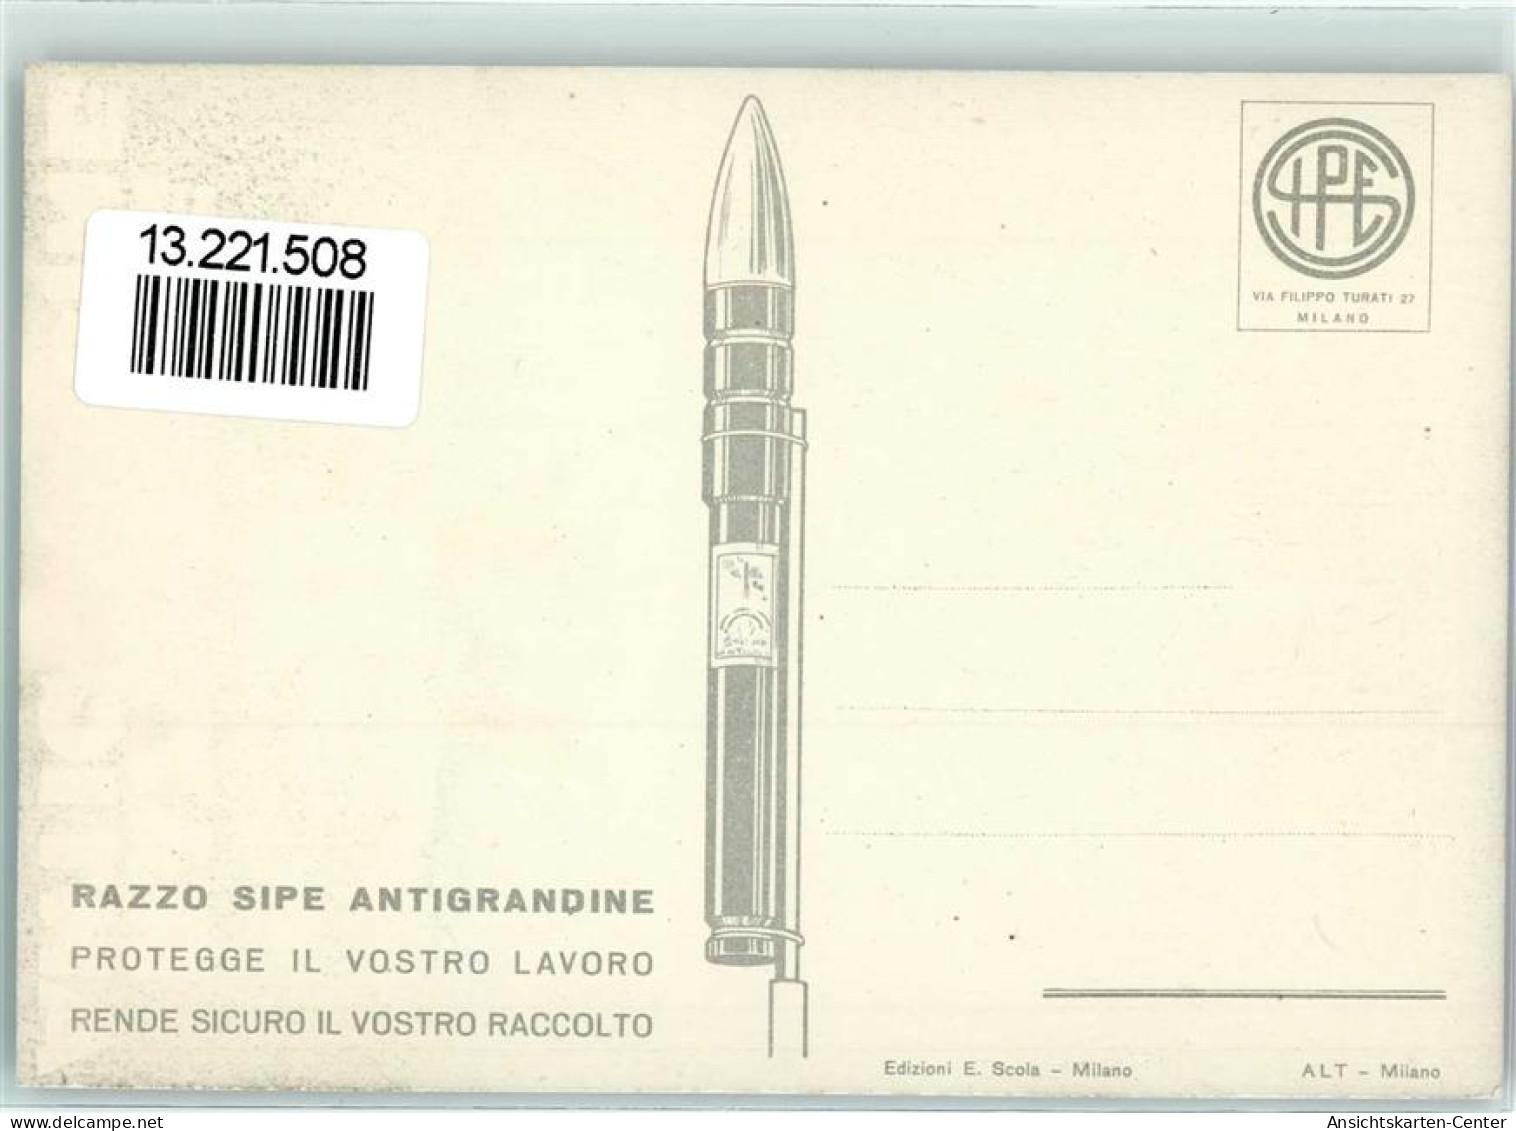 13221508 - Razzo Sipe Antigrandine - Waffen Jagdmunition Patronen  Regenbogen - Publicité